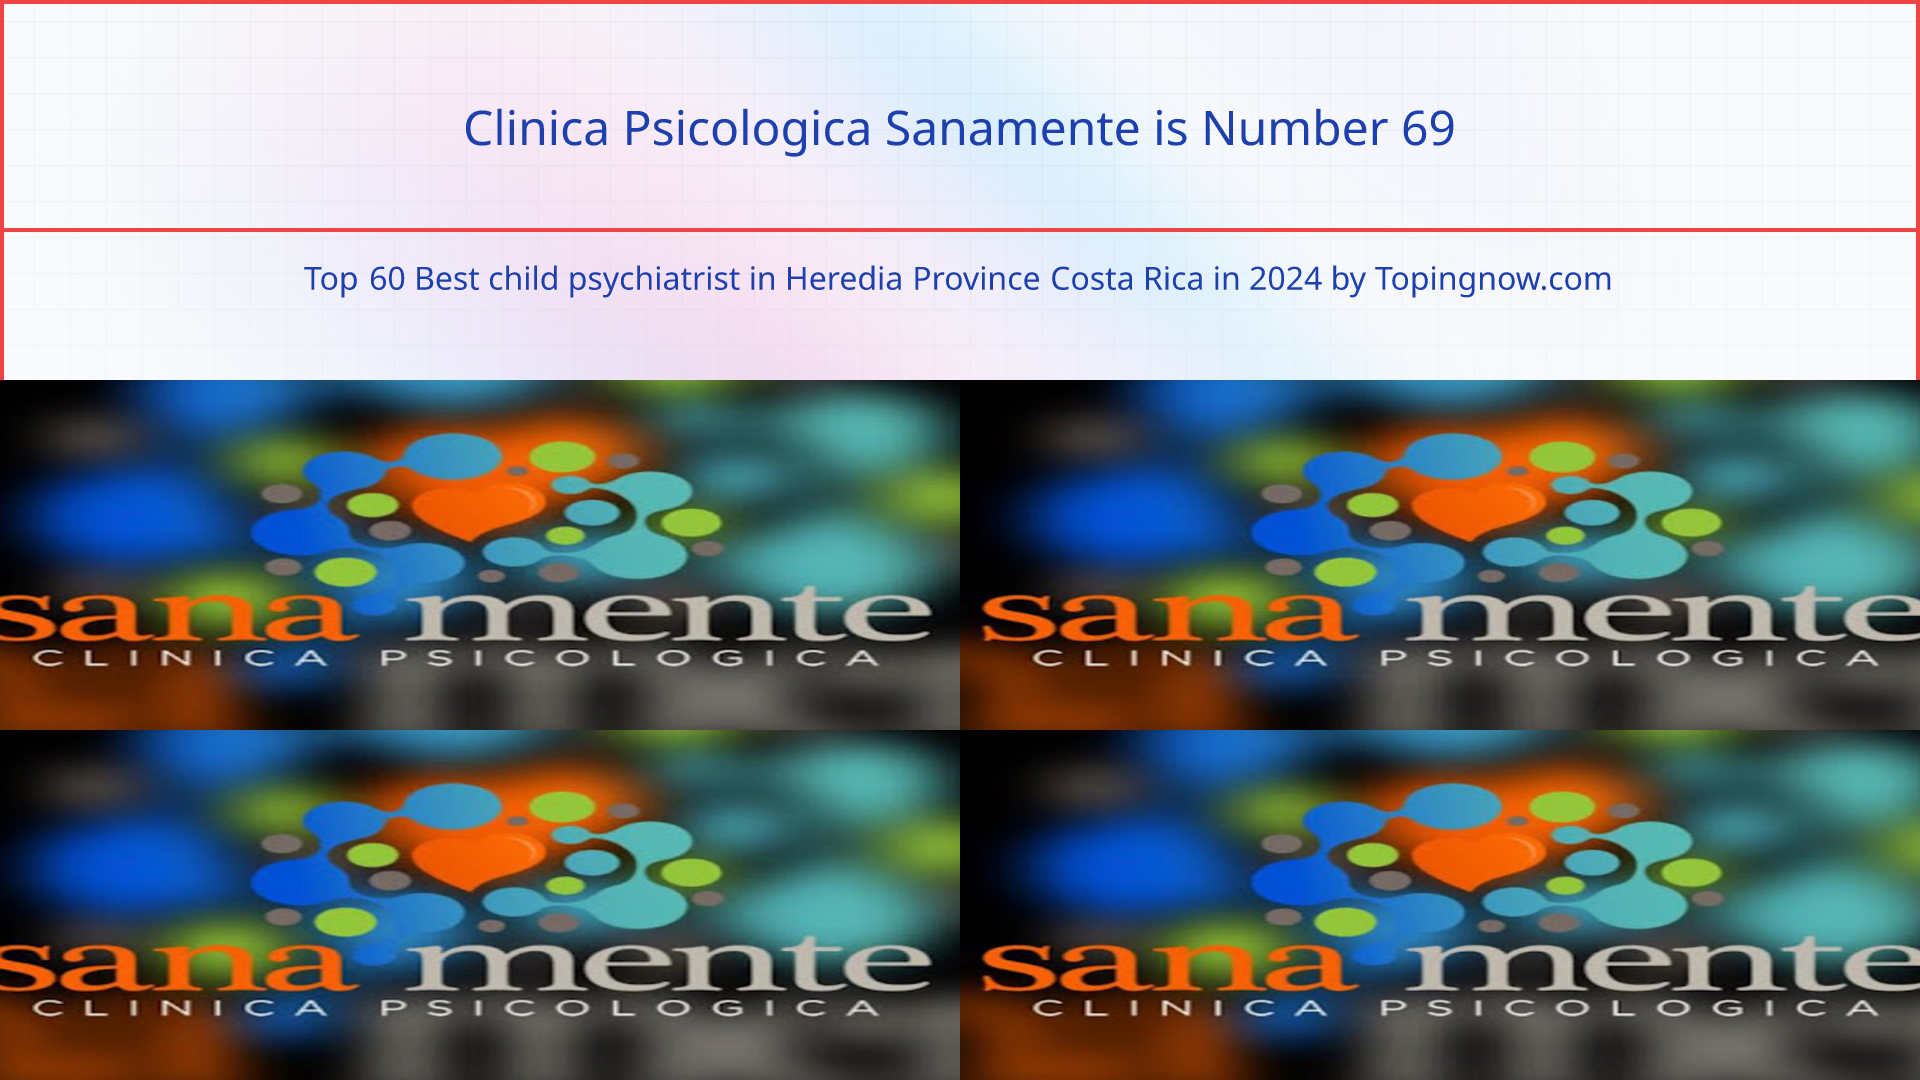 Clinica Psicologica Sanamente: Top 60 Best child psychiatrist in Heredia Province Costa Rica in 2024